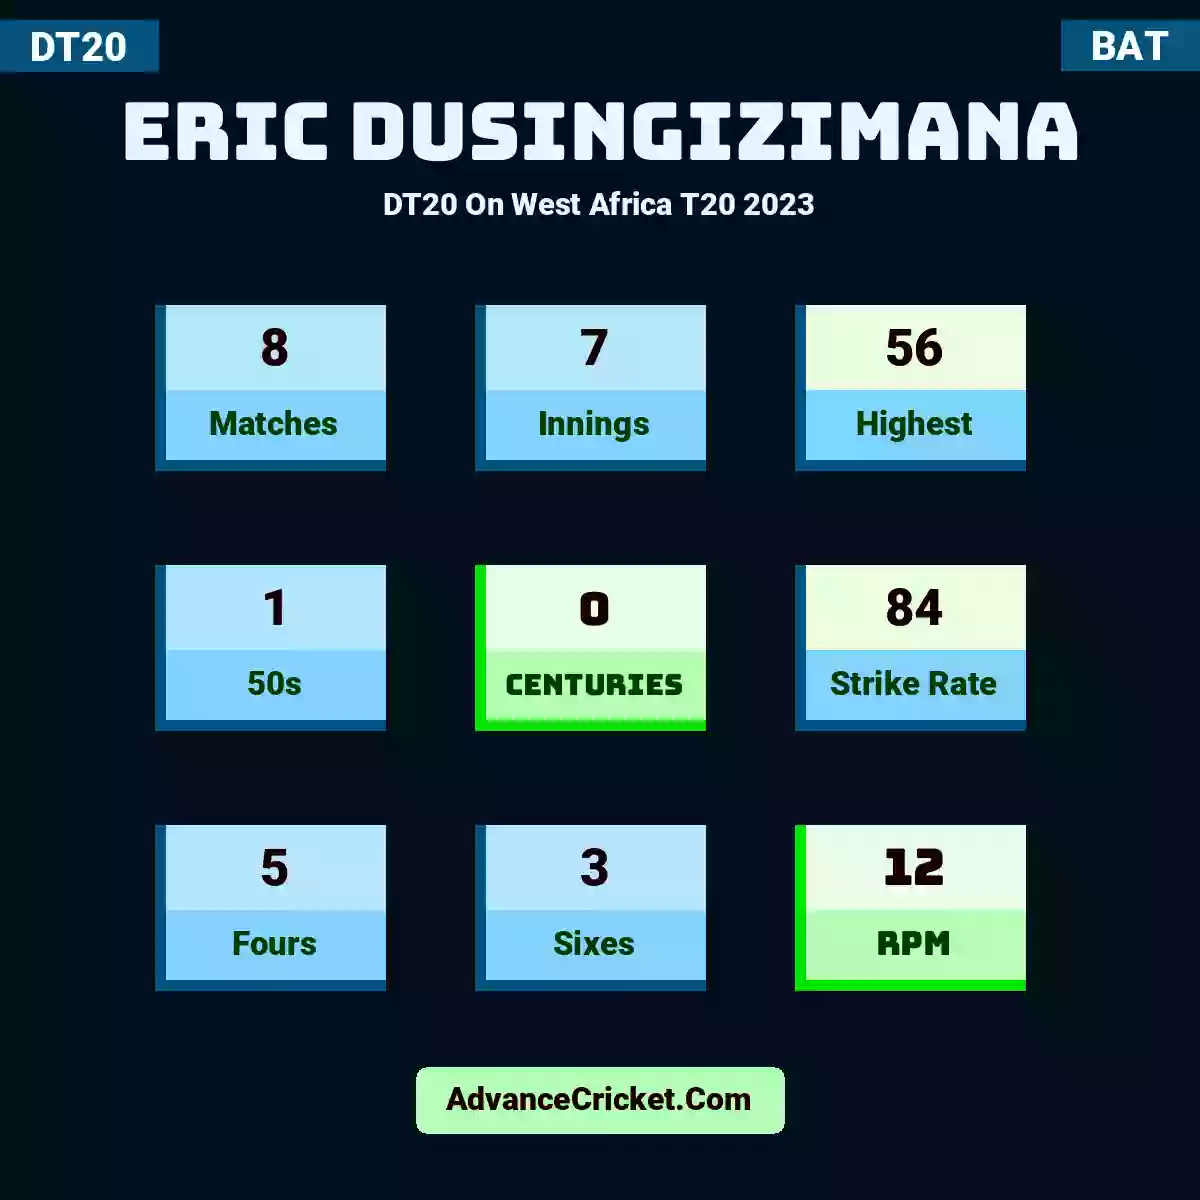 Eric Dusingizimana DT20  On West Africa T20 2023, Eric Dusingizimana played 8 matches, scored 56 runs as highest, 1 half-centuries, and 0 centuries, with a strike rate of 84. E.Dusingizimana hit 5 fours and 3 sixes, with an RPM of 12.